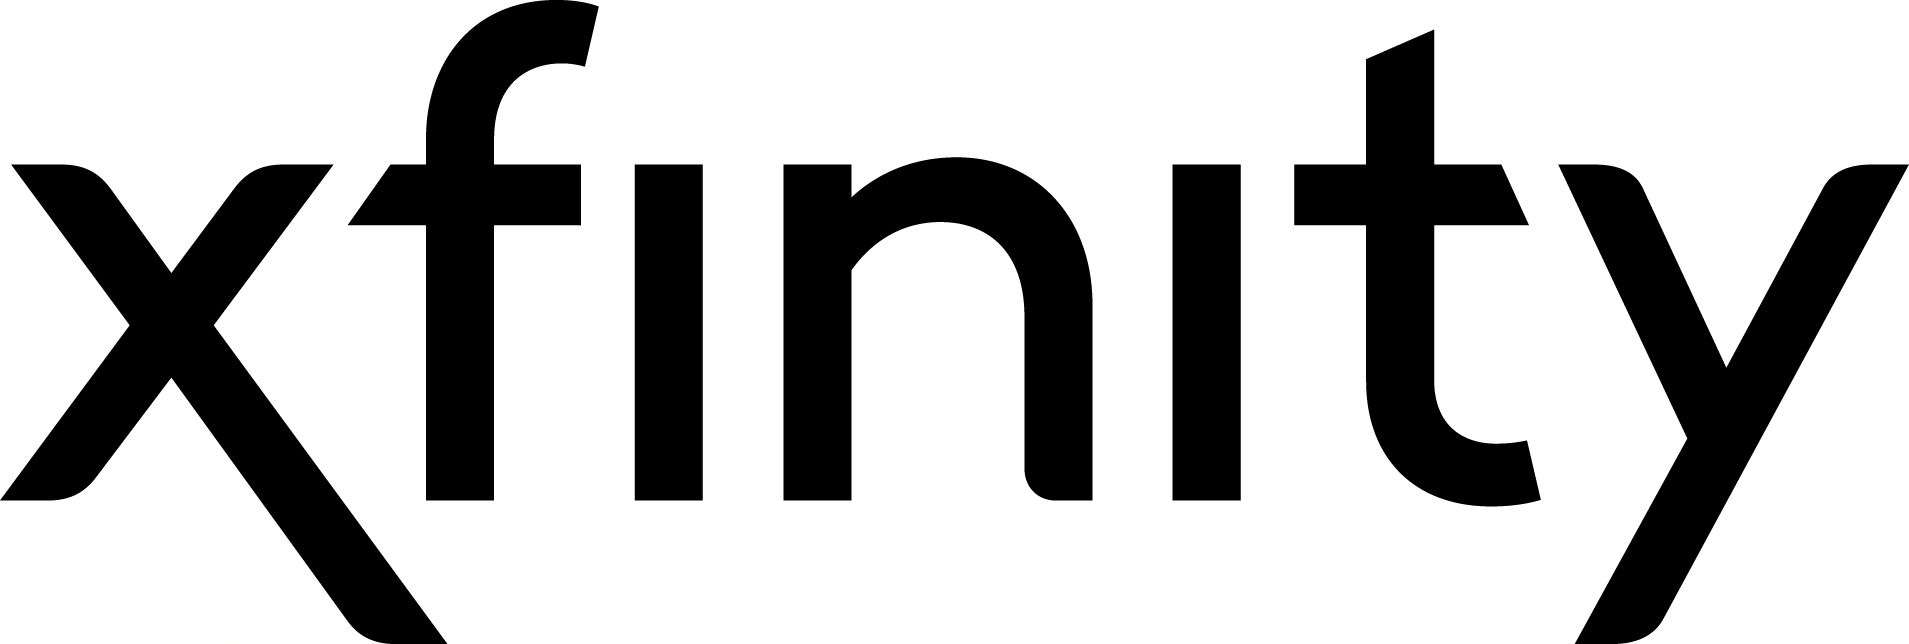 Xfinity Black Logo